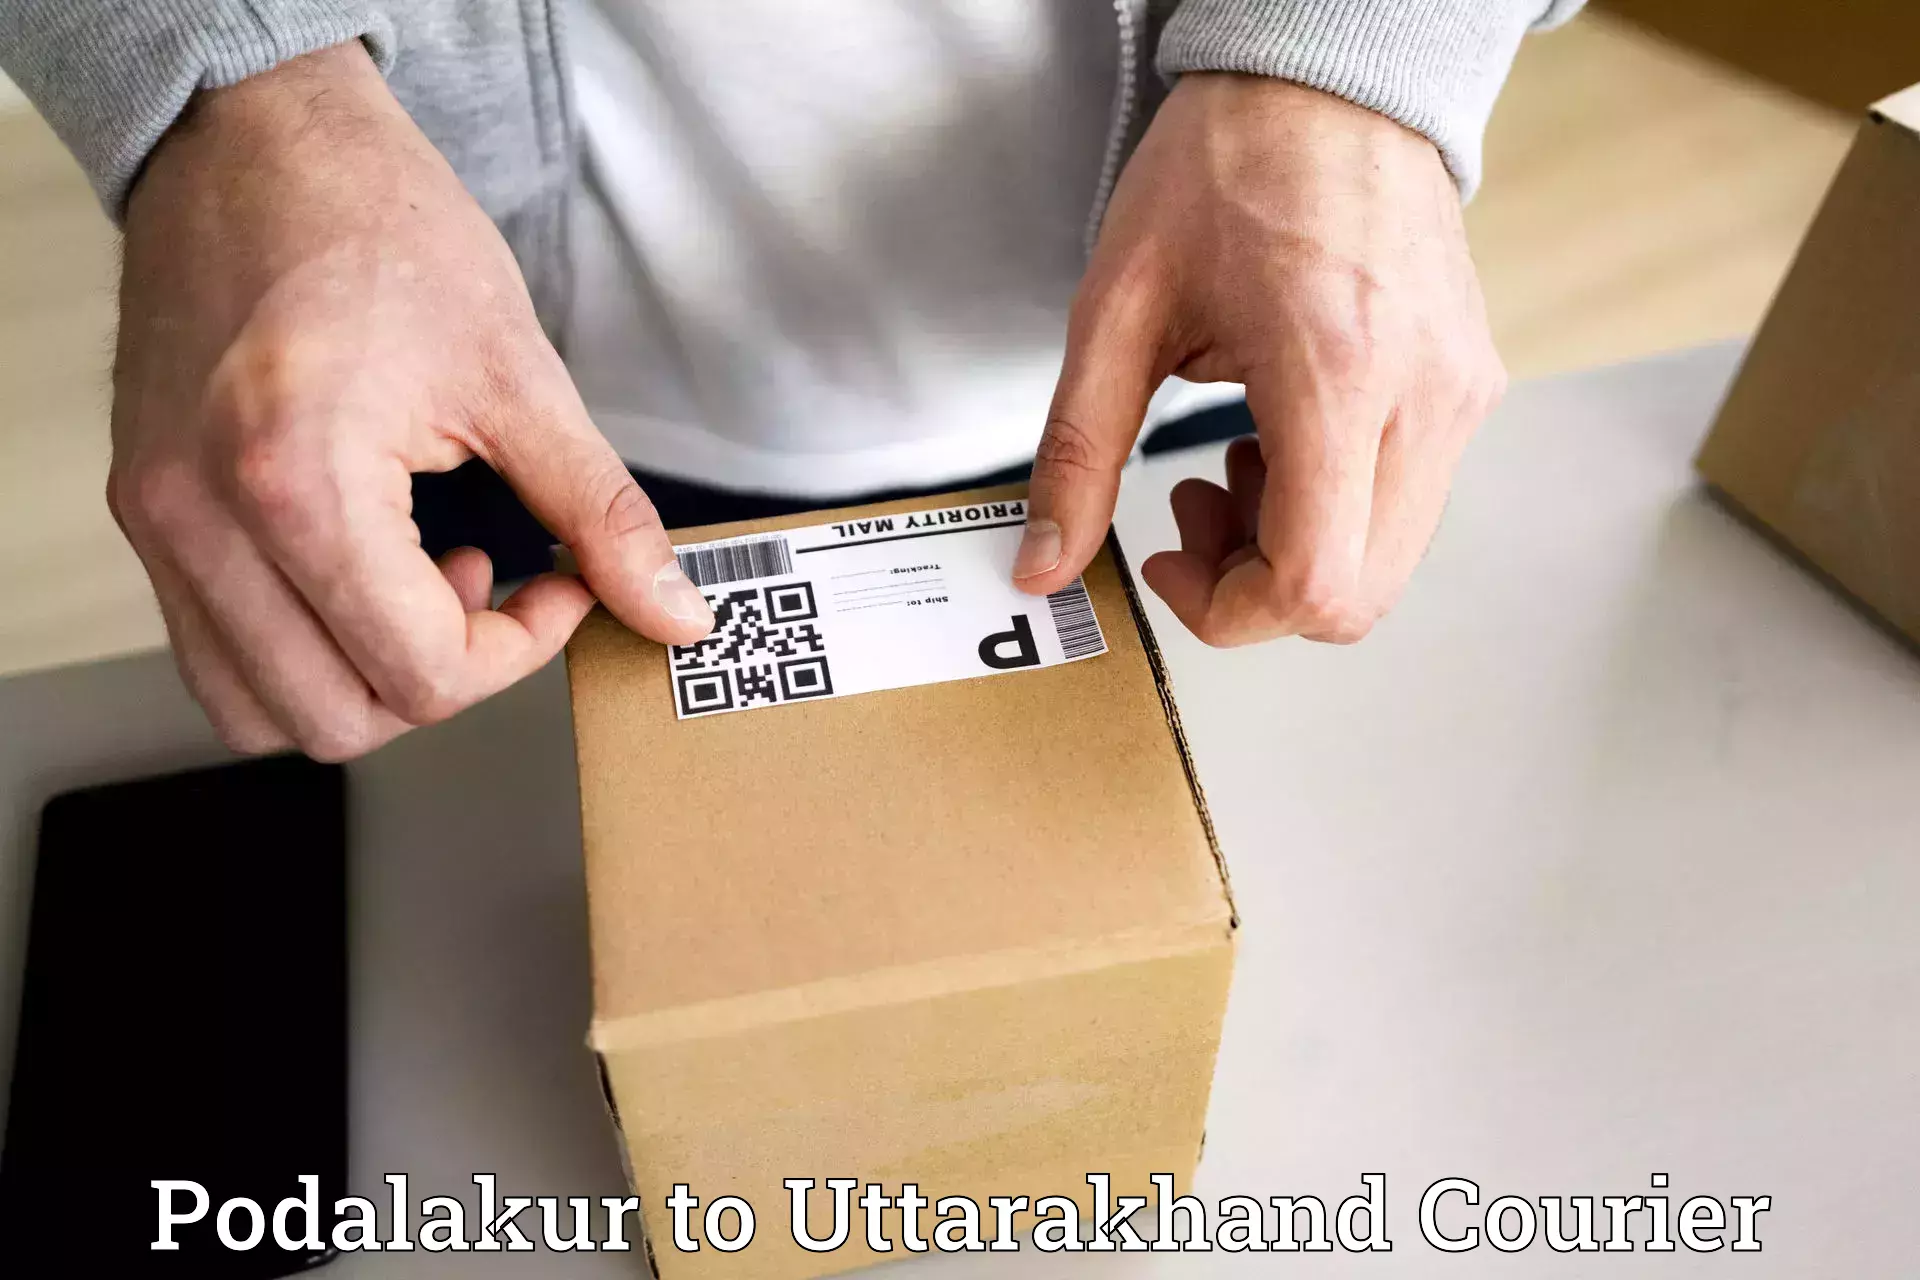 Flexible delivery scheduling Podalakur to IIT Roorkee